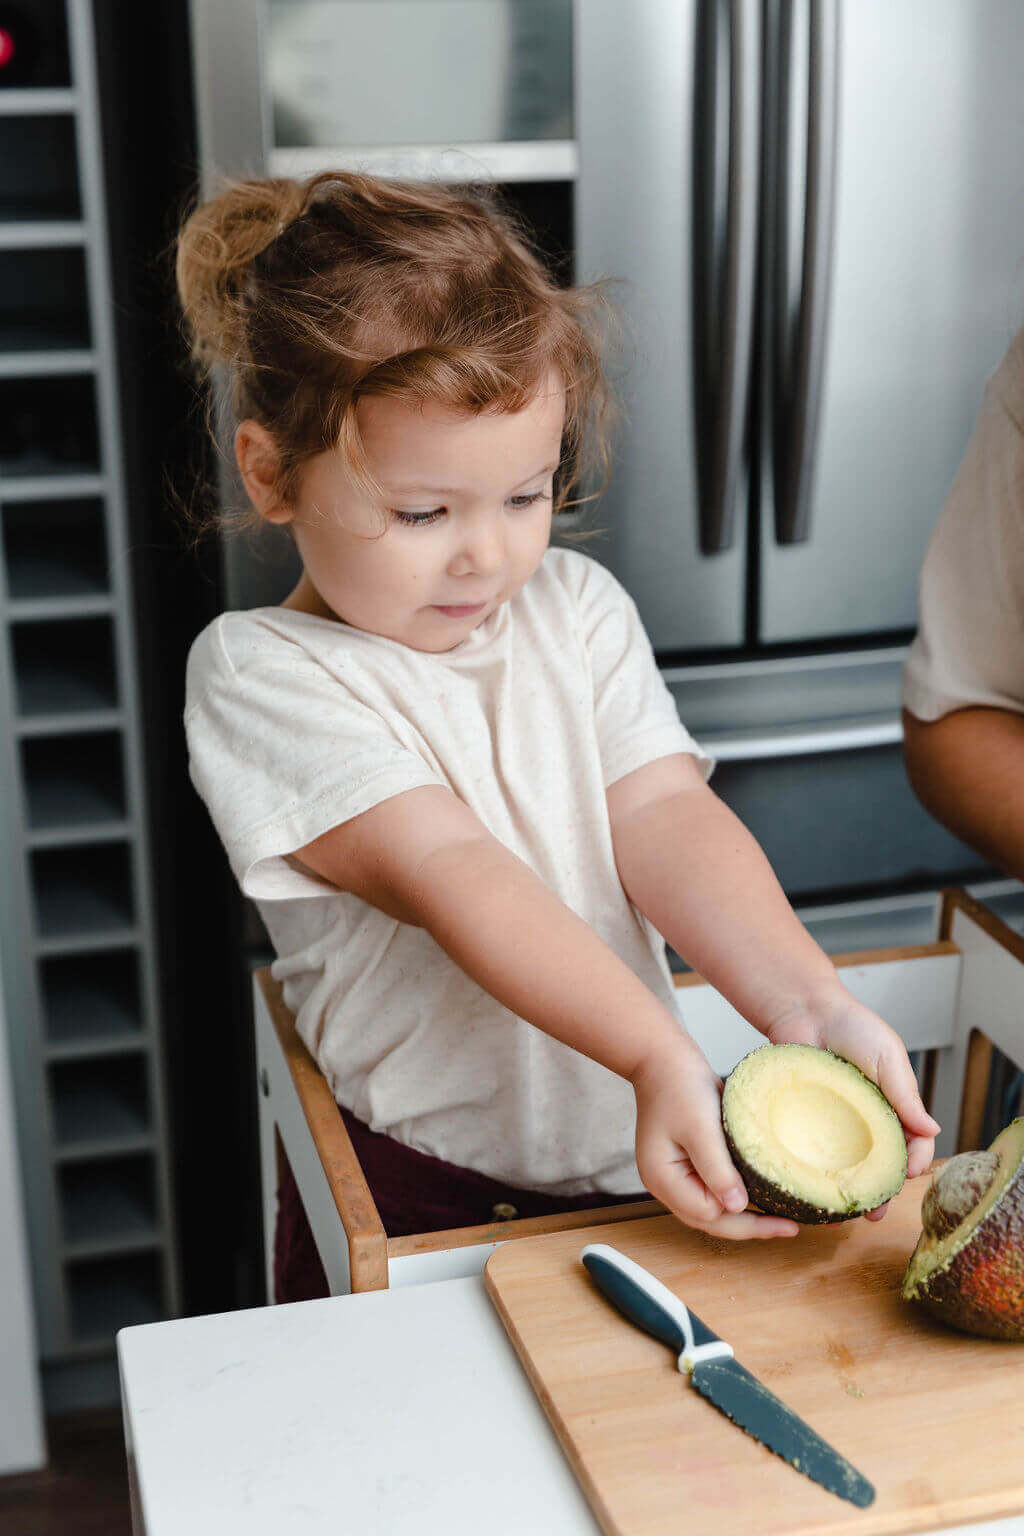 Introducing KiddiKutter  Cuts Food, Not Fingers! – Potters Cookshop